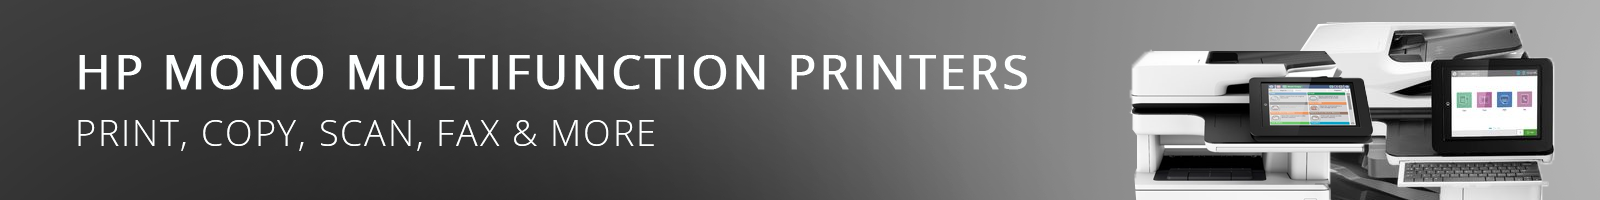 Mono Multifunction Printers